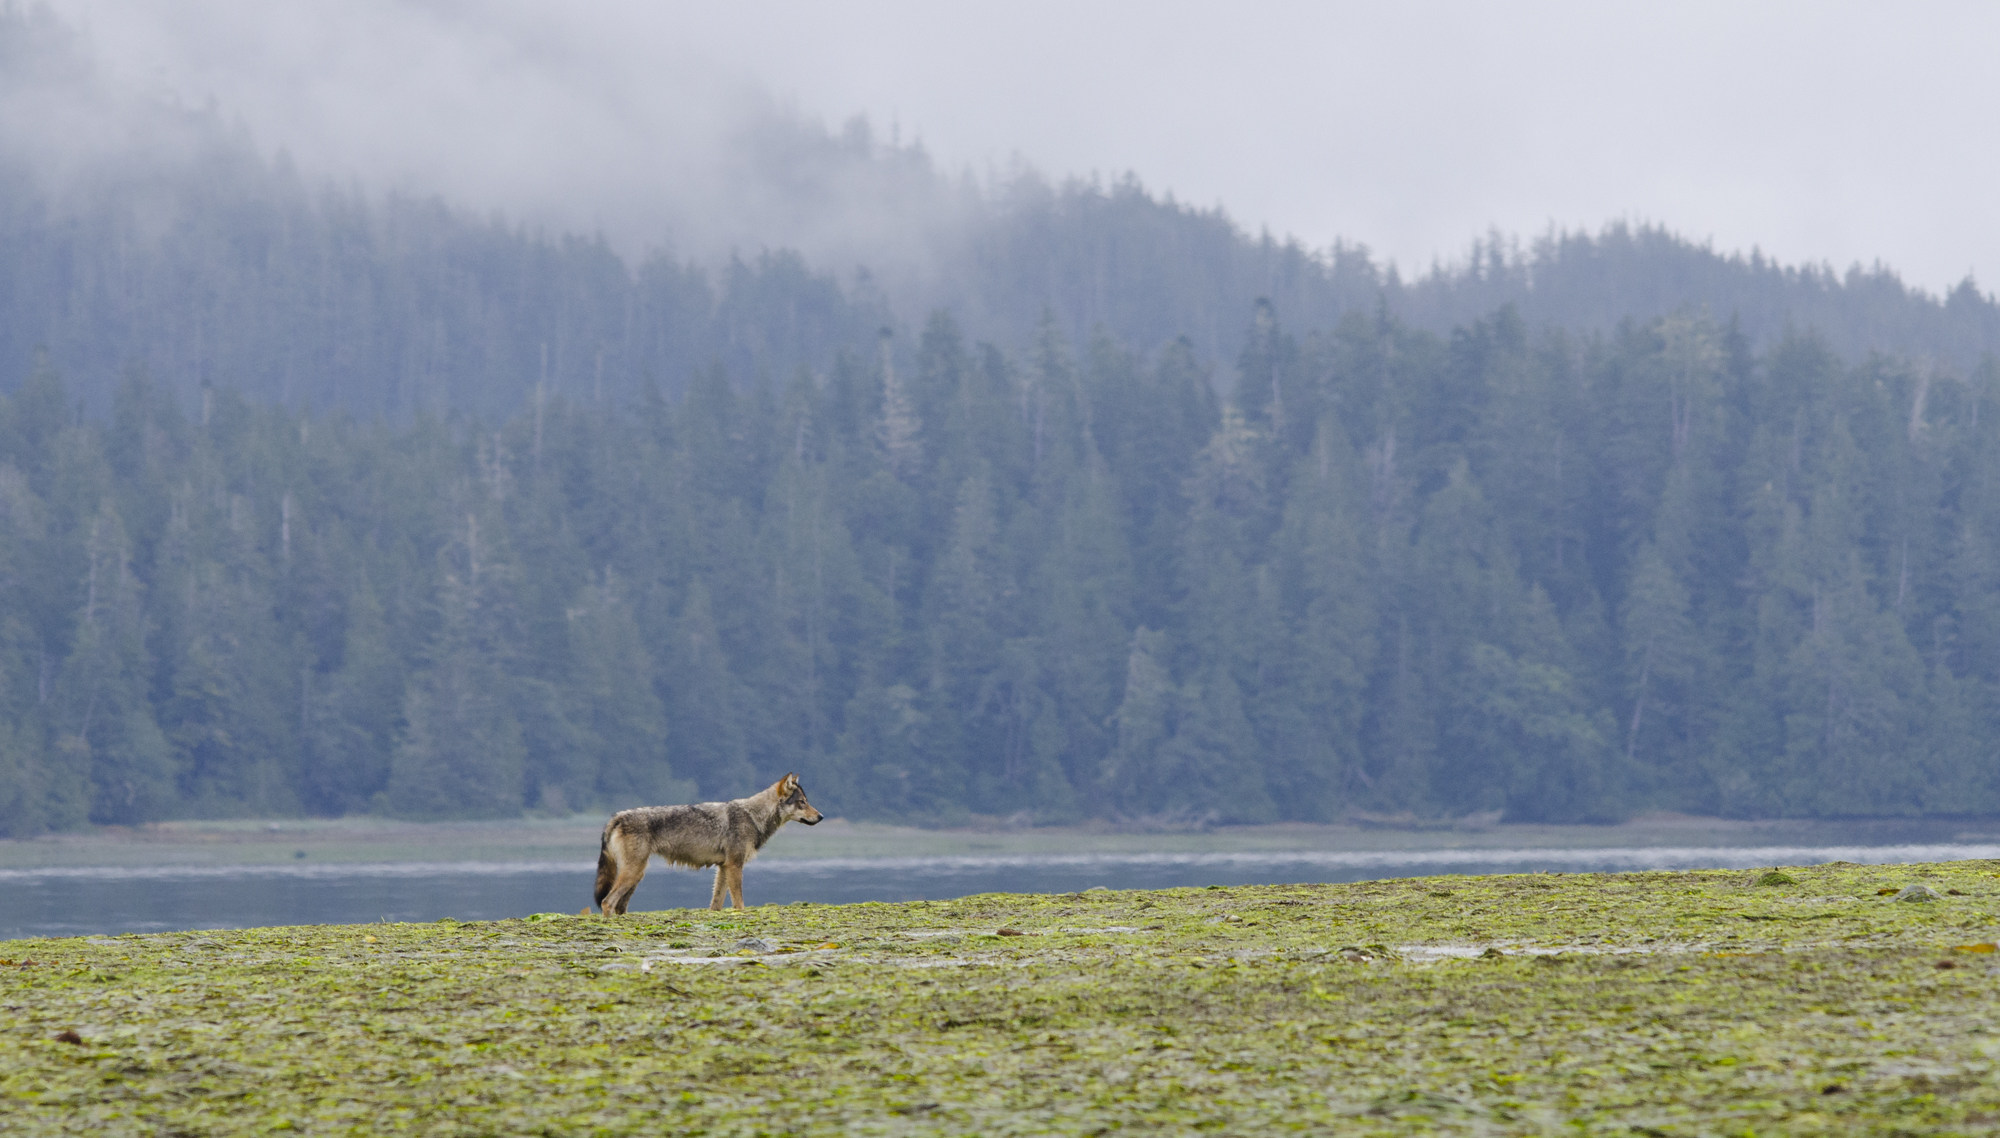  A coastal grey wolf patrols her territory at low tide.&nbsp; 